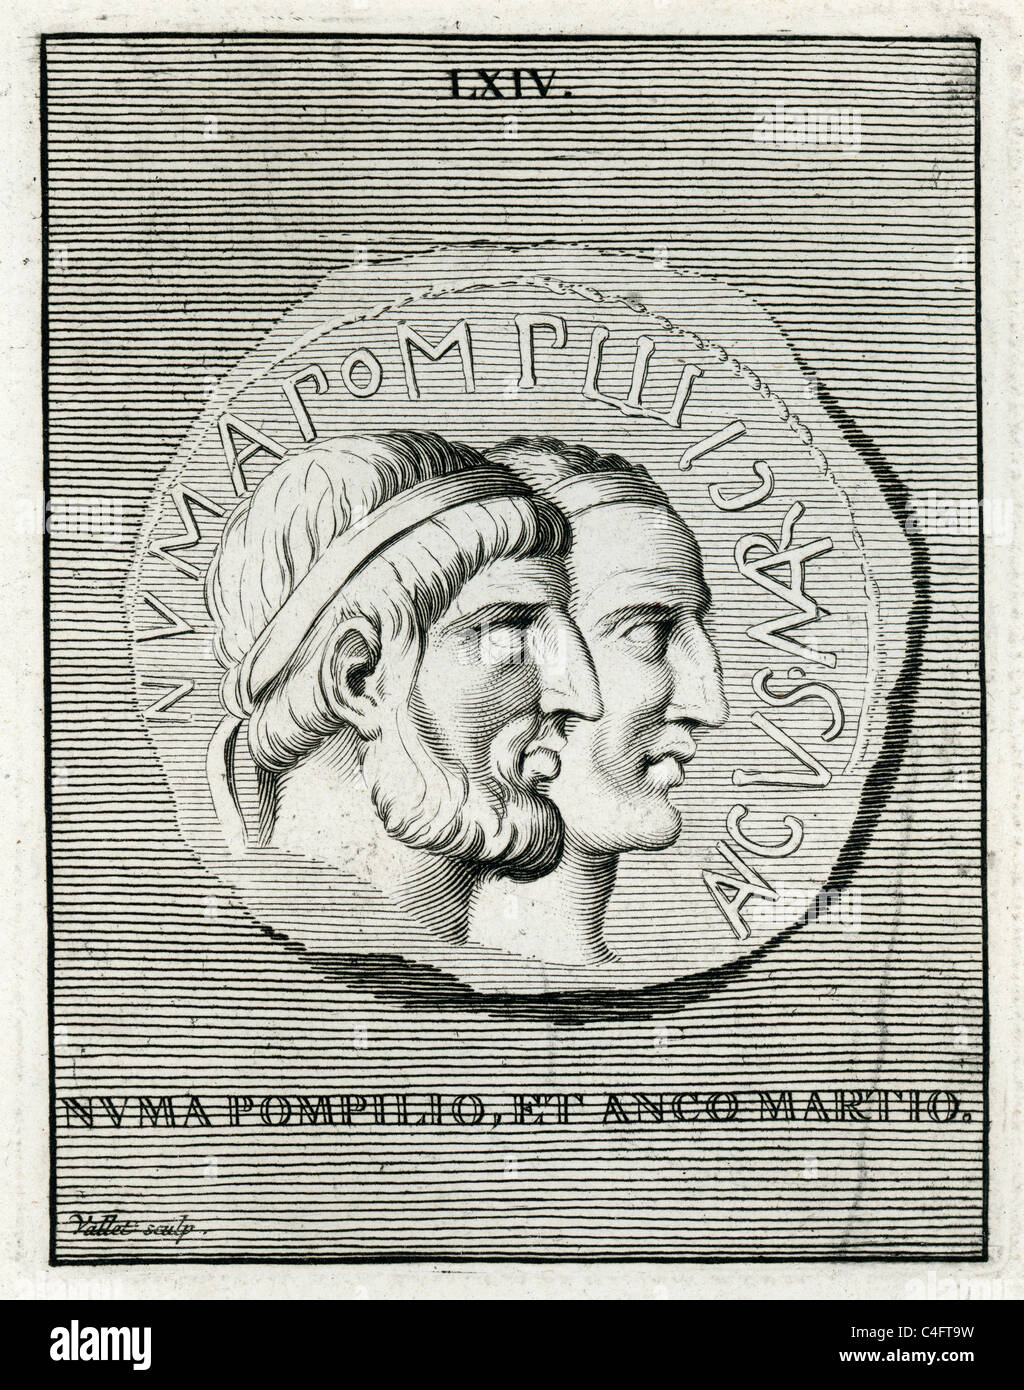 Classical portrait of Numa Pompilius the legendary second king of Rome, succeeding Romulus. Stock Photo